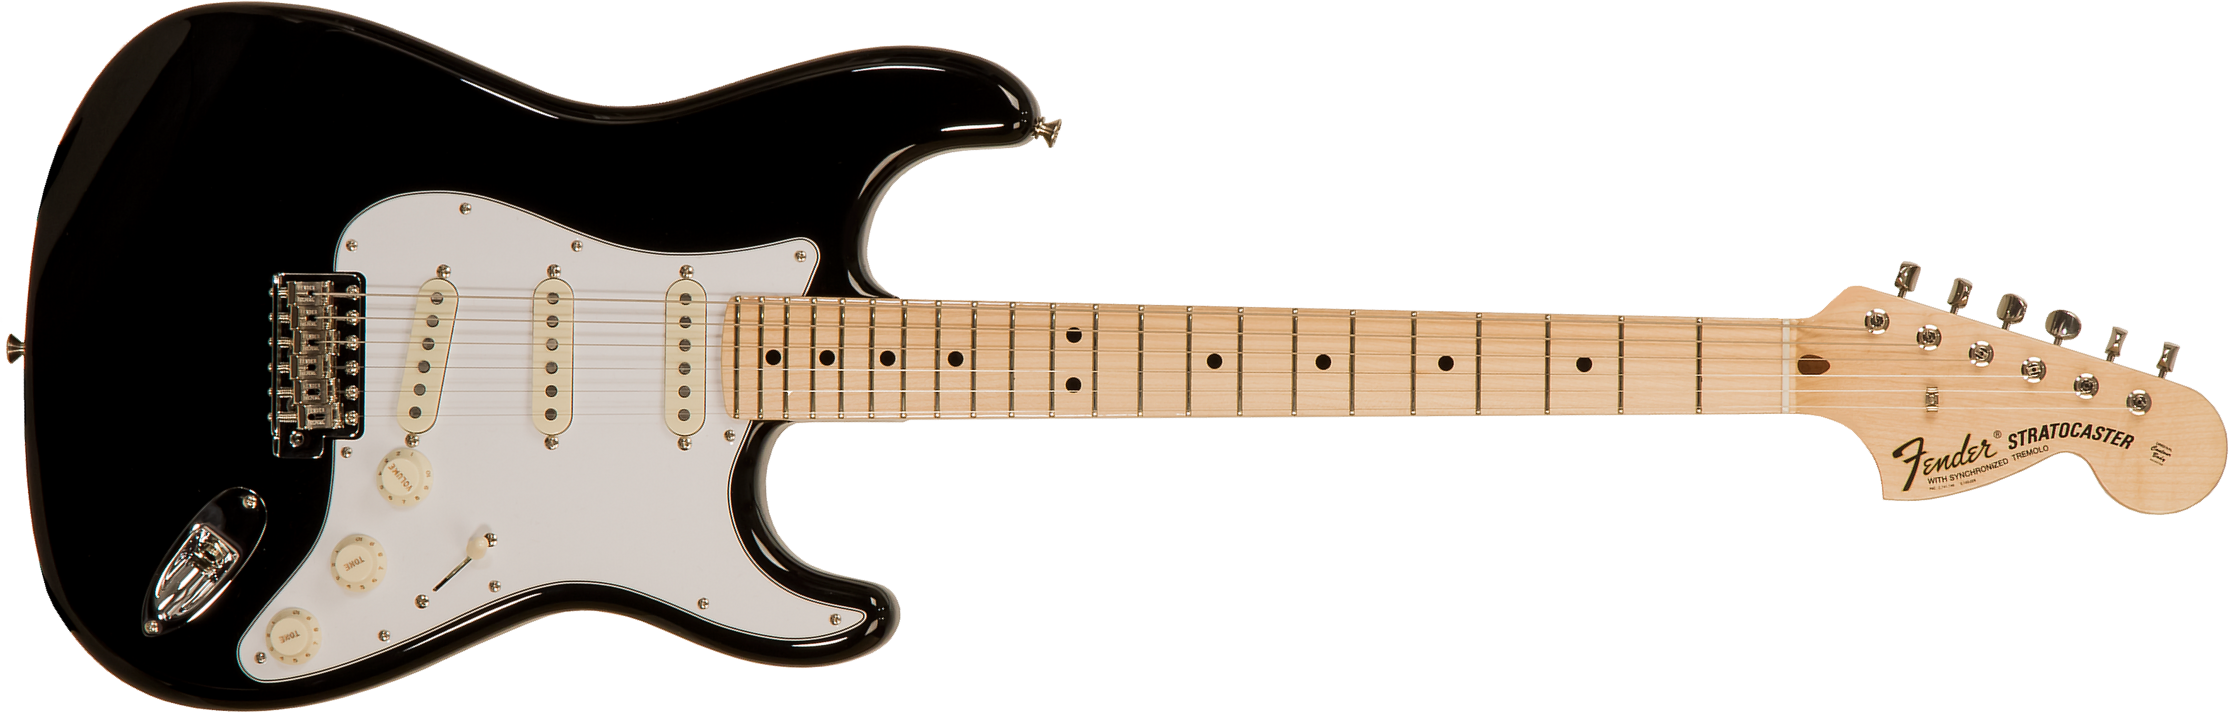 Fender Custom Shop Strat 1969 3s Trem Mn #r123423 - Nos Black - Guitarra eléctrica con forma de str. - Main picture